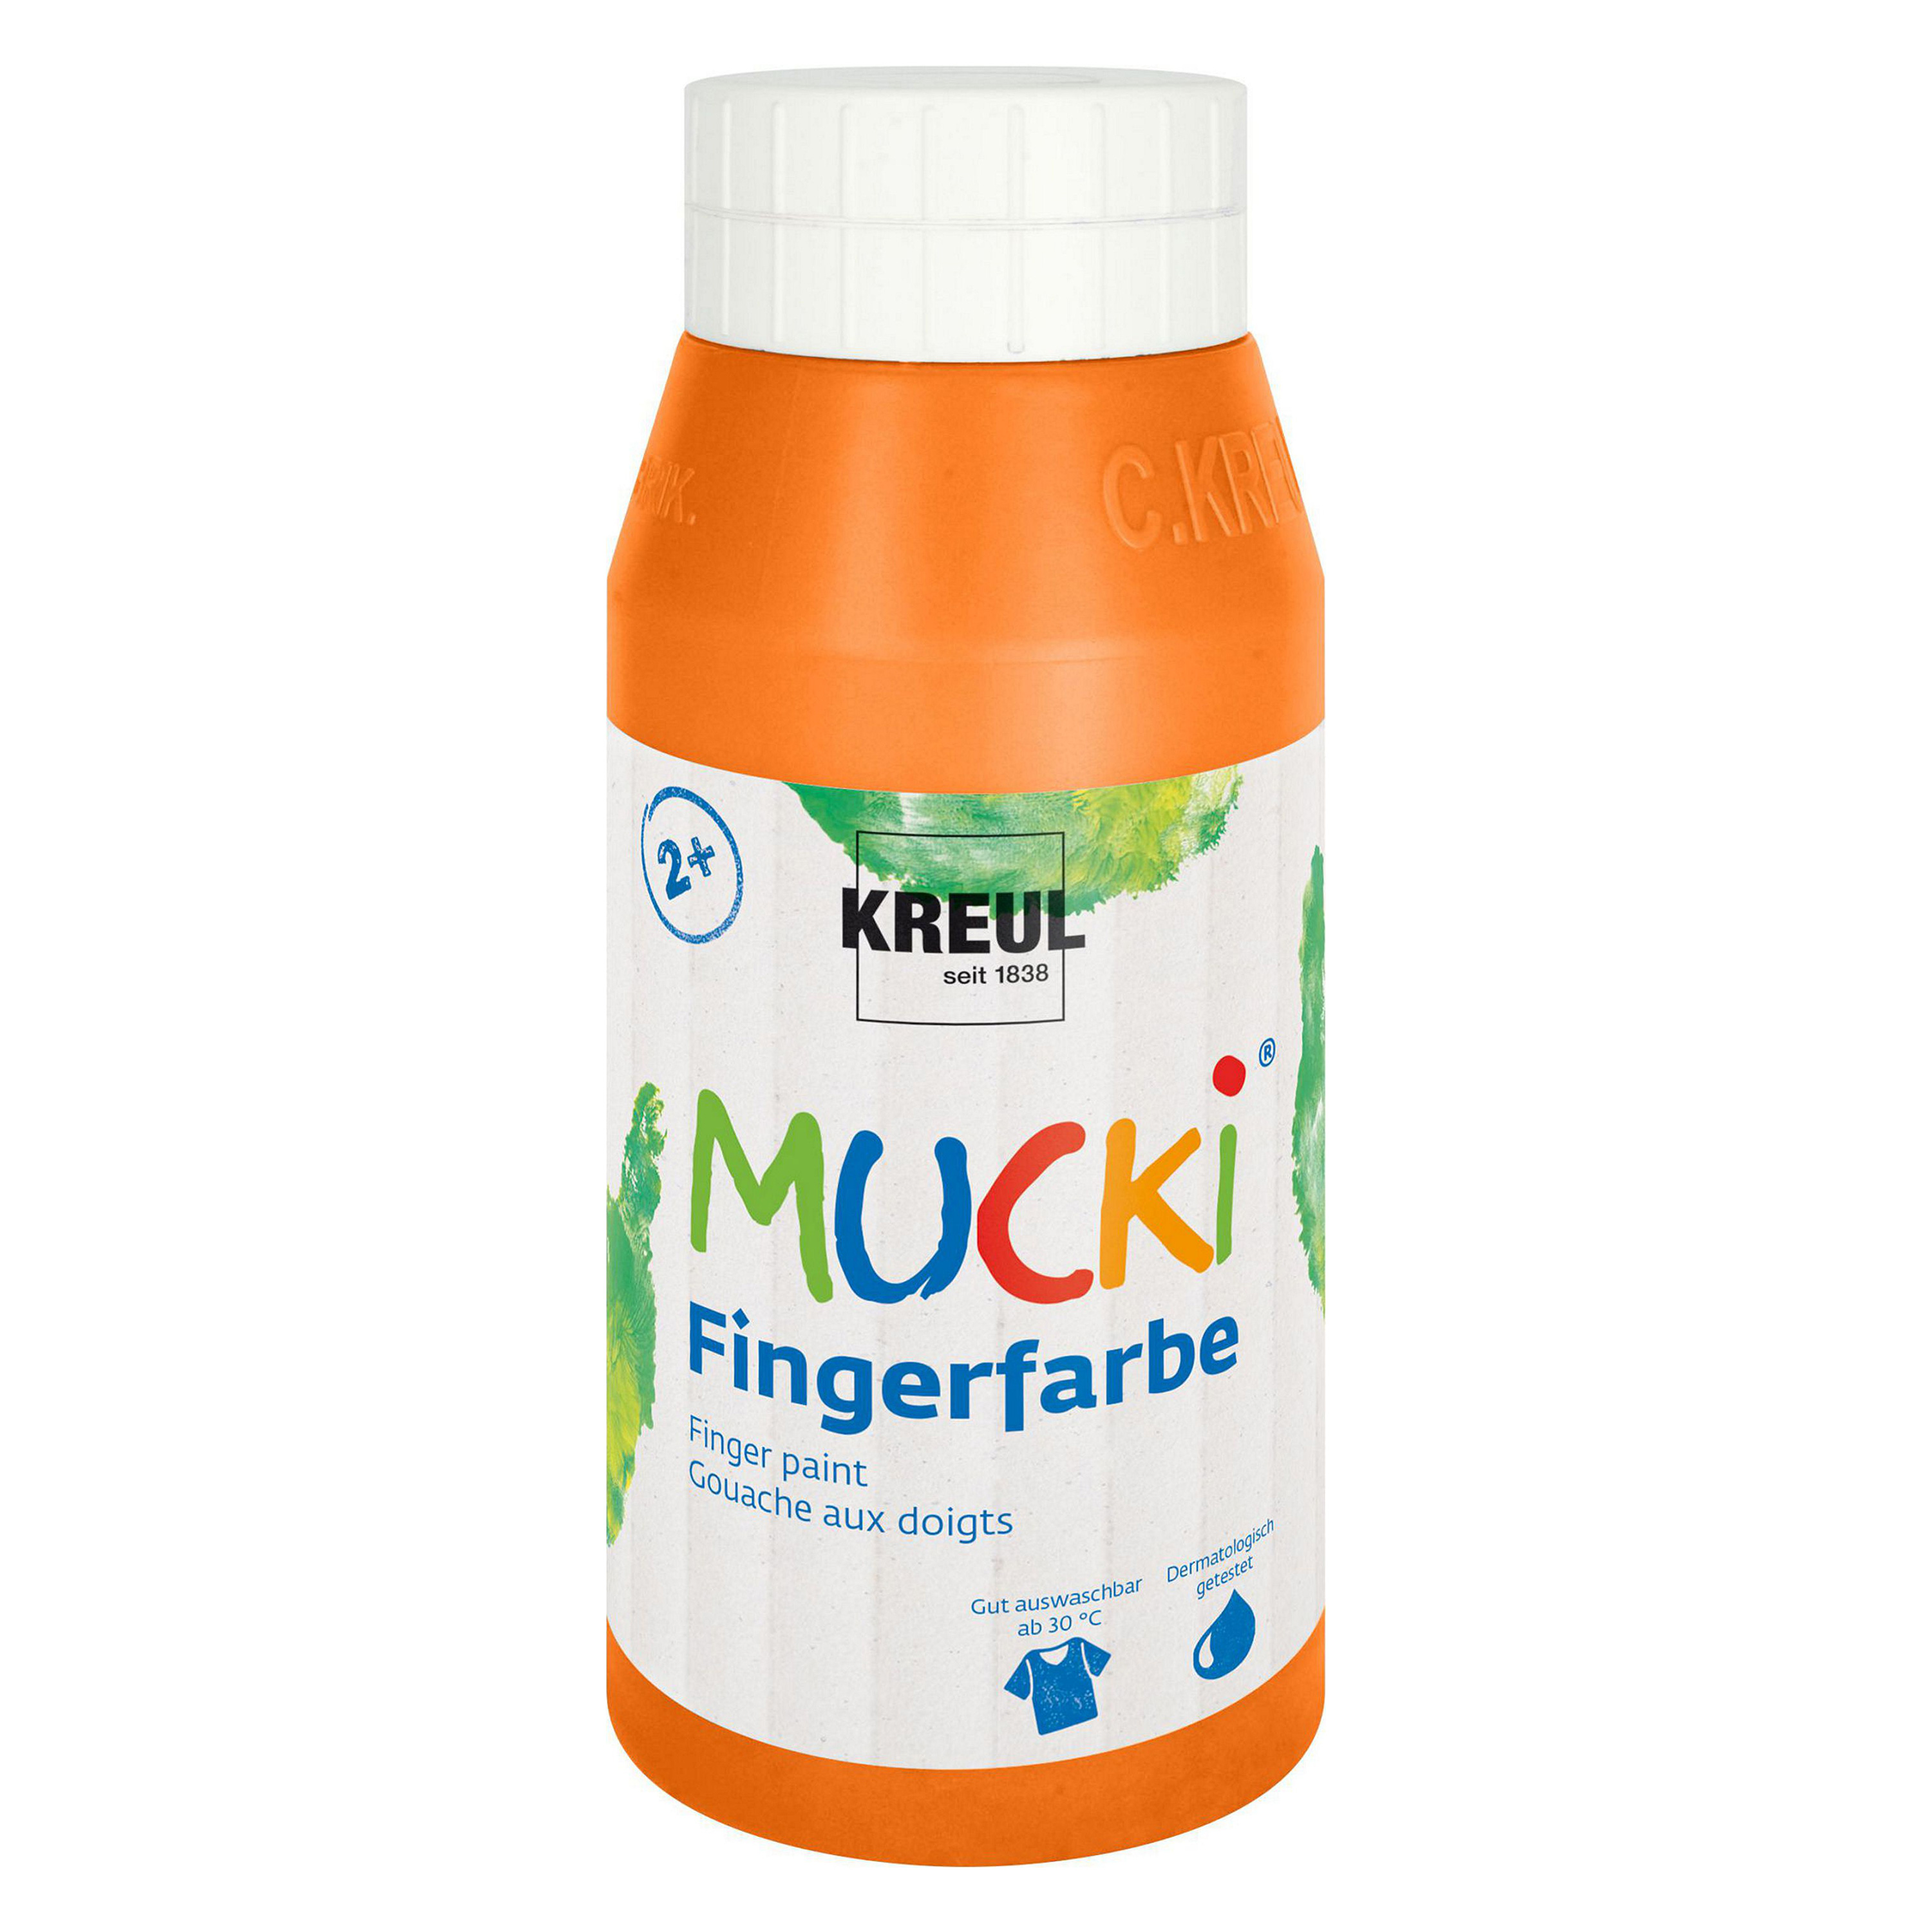 MUCKI Fingerfarbe, 750 ml, orange